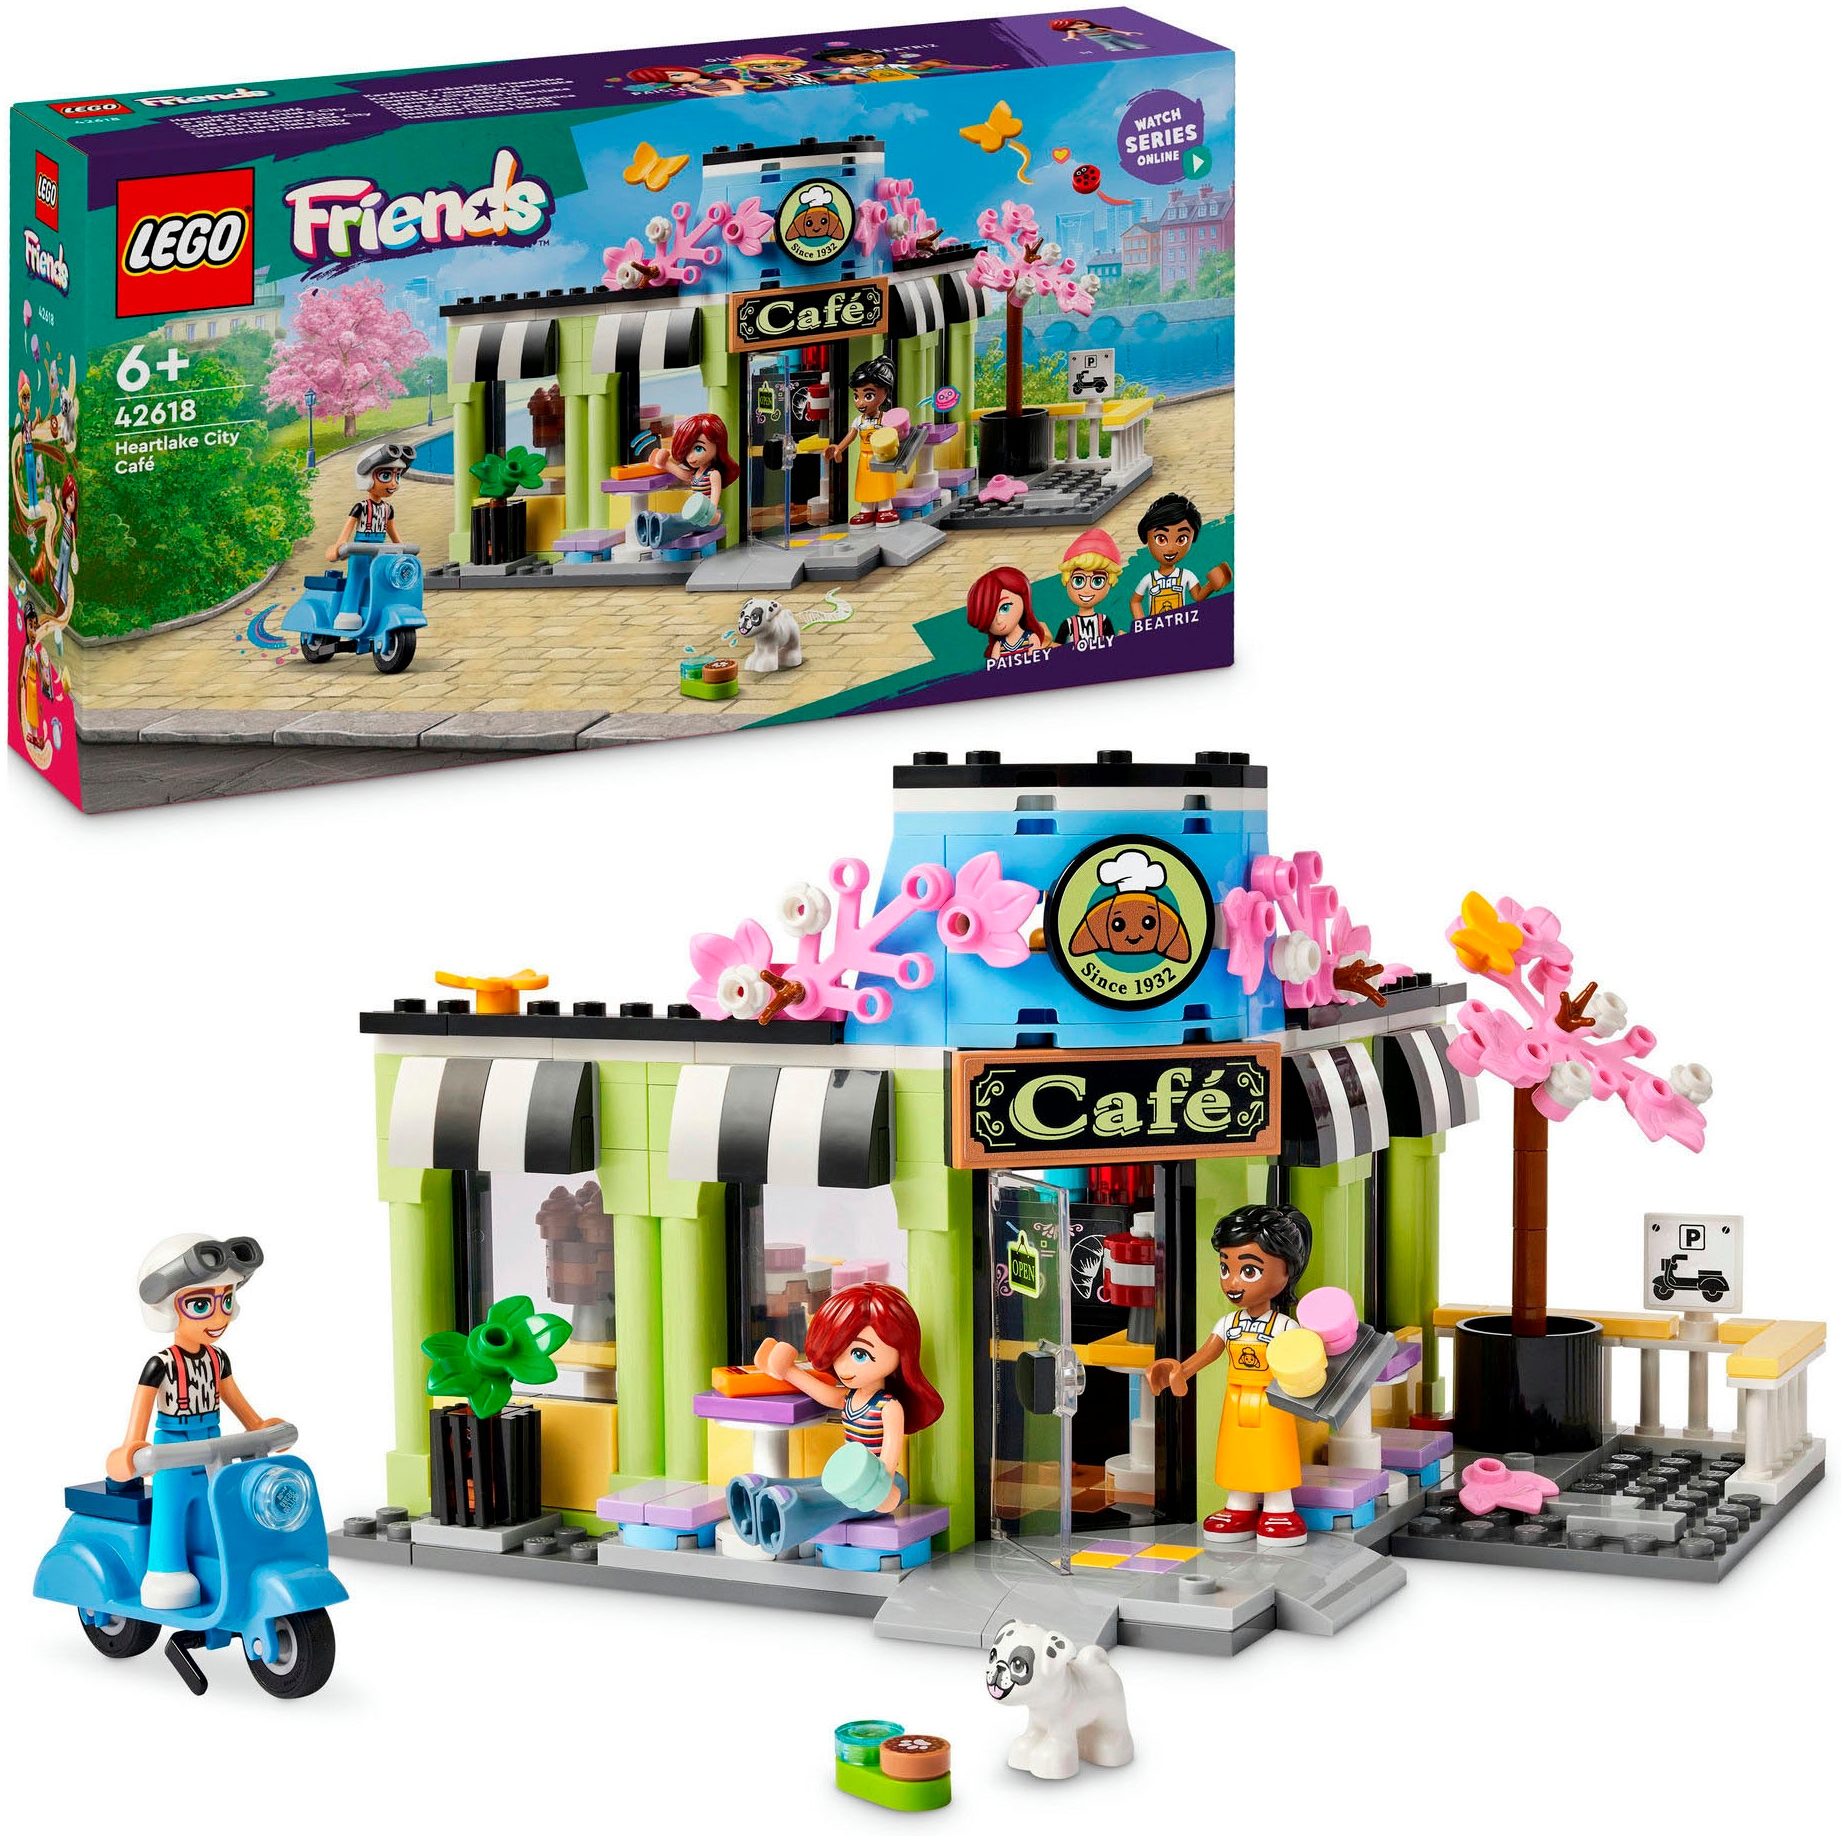 Konstruktionsspielsteine »Heartlake City Café (42618), LEGO Friends«, (426 St.), Made...